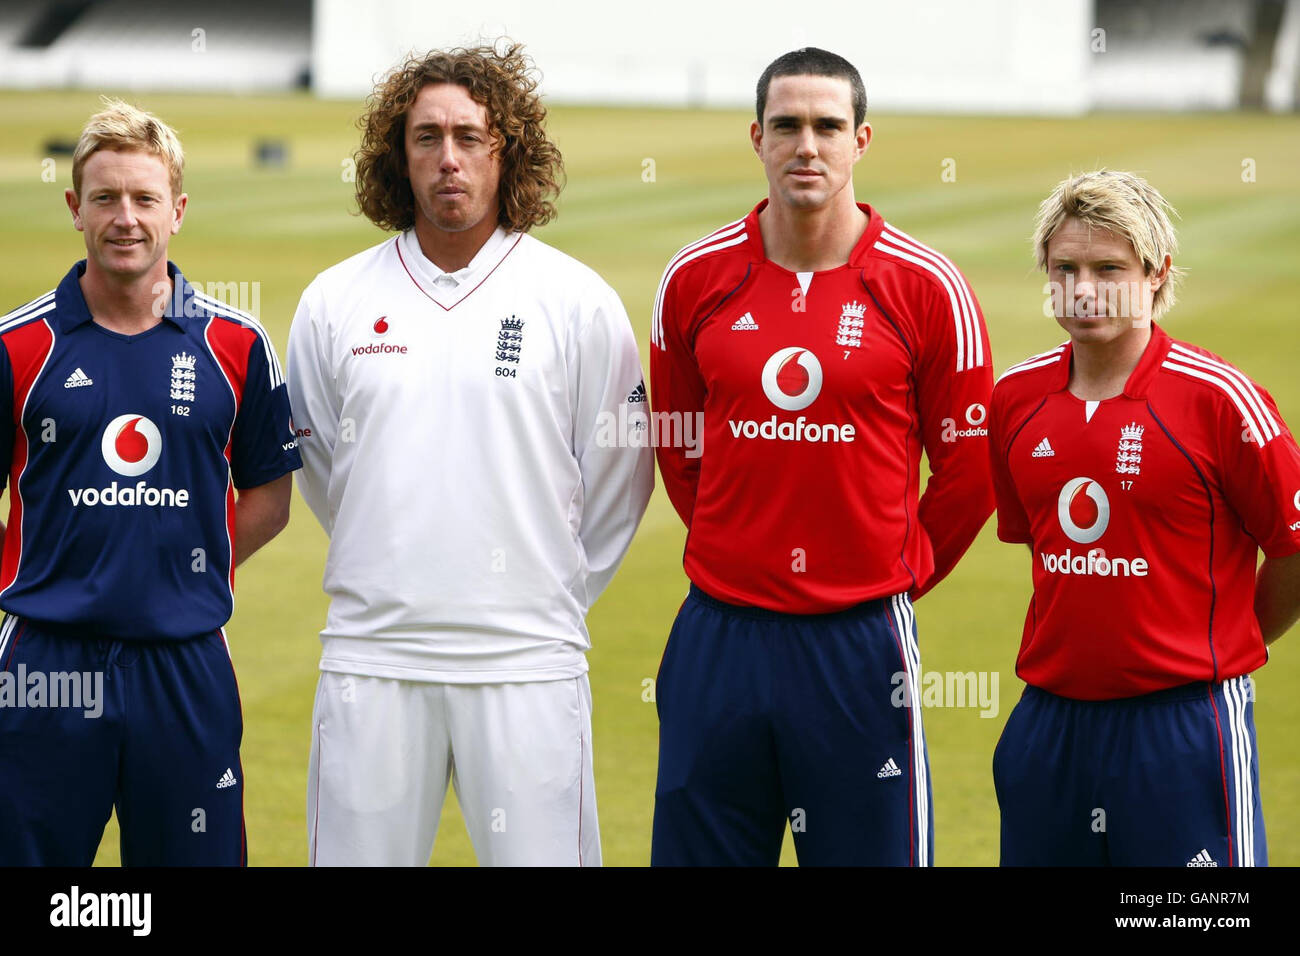 england cricket new kit